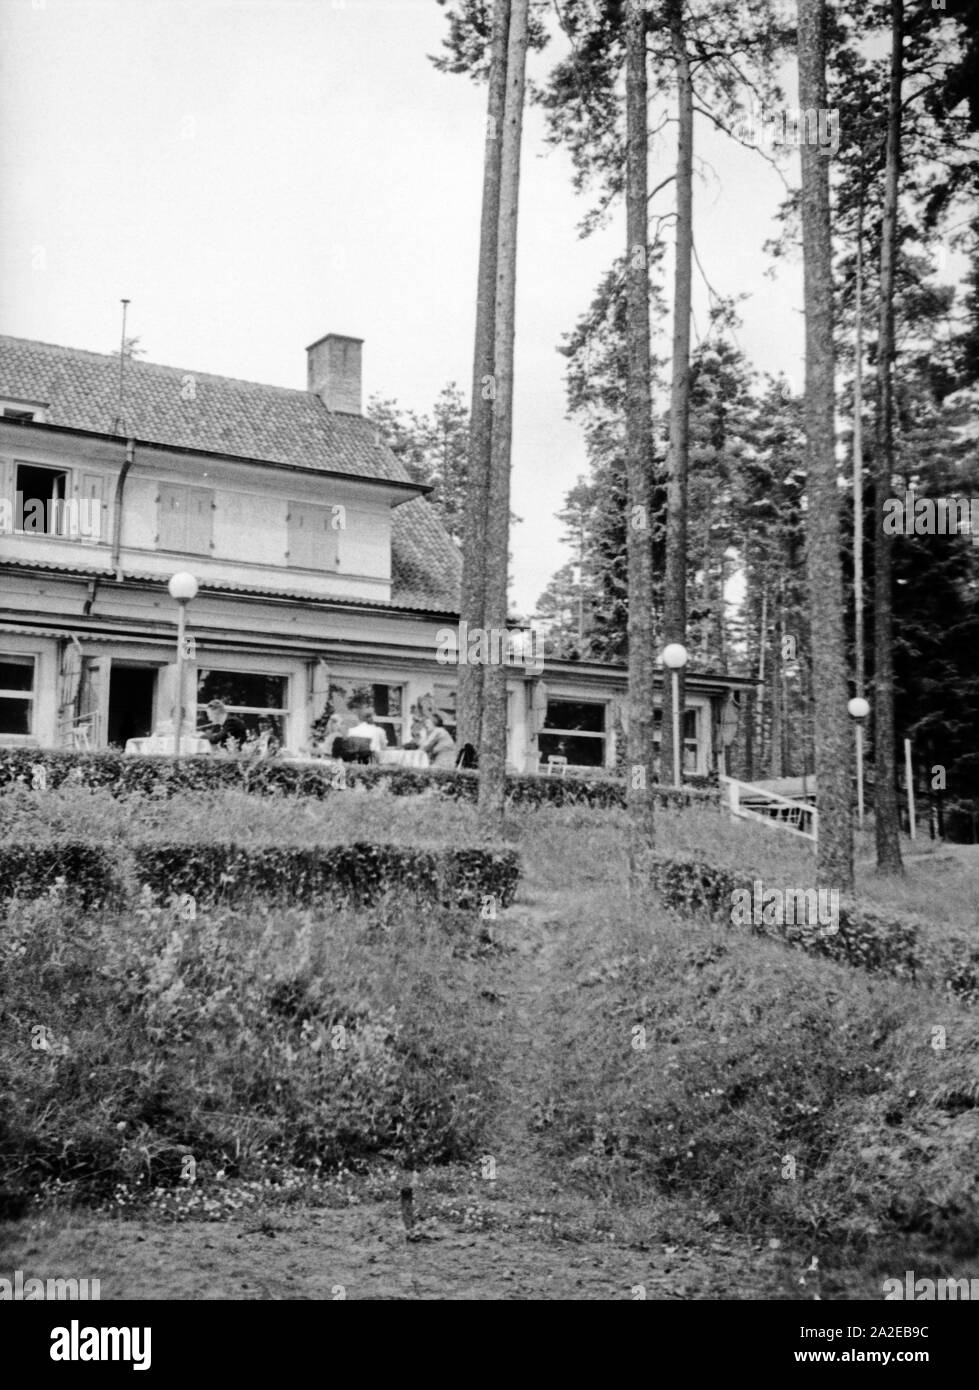 Das Kurhaus Niedersee in Masuren, Ostpreußen, 1930er Jahre. Spa resort Niedersee in Masuria, East Prussia, 1930s. Stock Photo